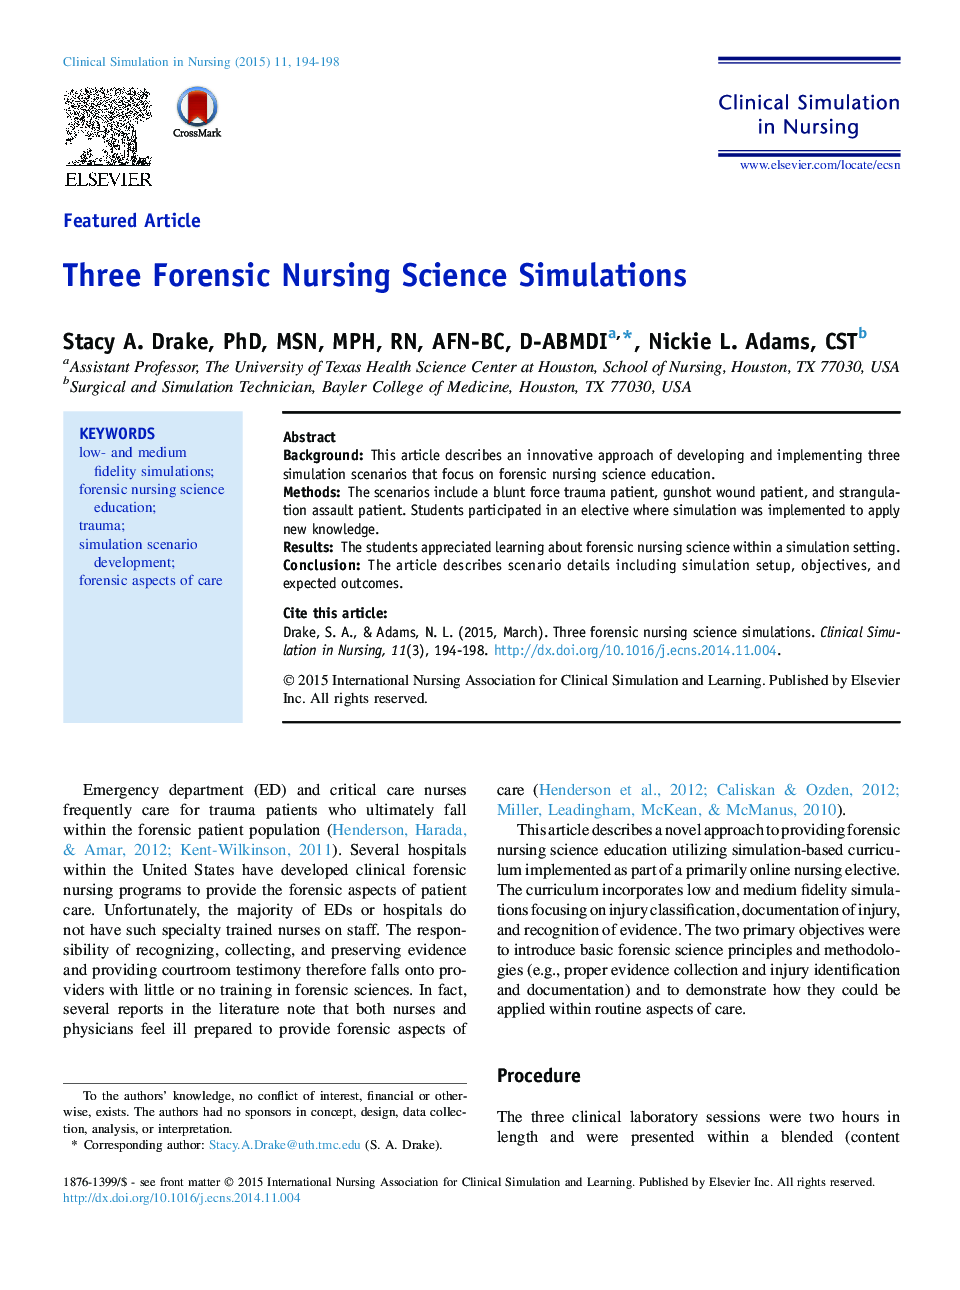 Three Forensic Nursing Science Simulations 